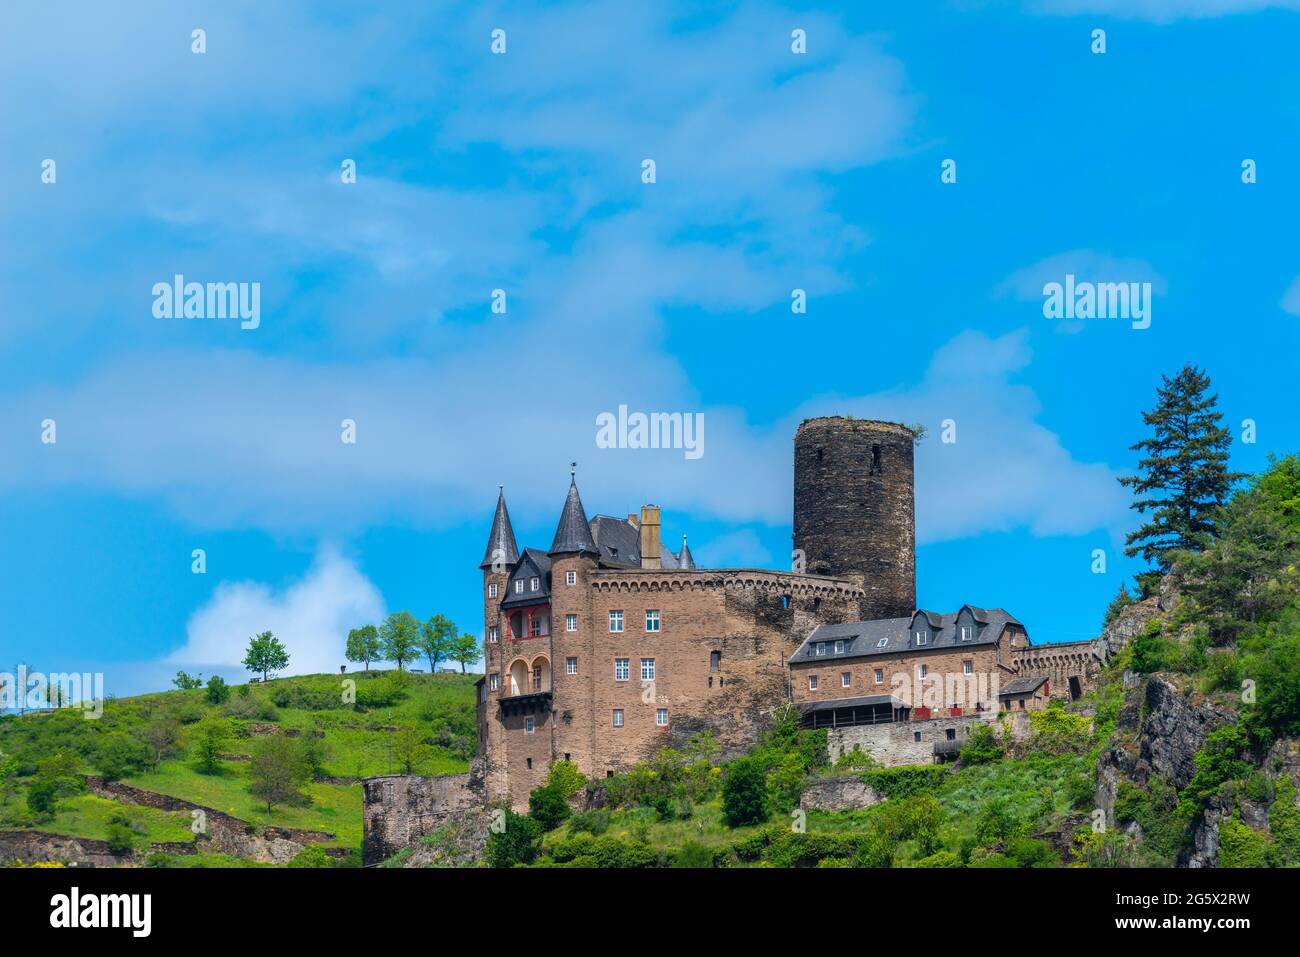 14th century Katz Castle, St. Goarshausen, Upper Middle Rhine Valley, UNESCO World Heritage Region, Rhineland-Palatinate, Germany Stock Photo